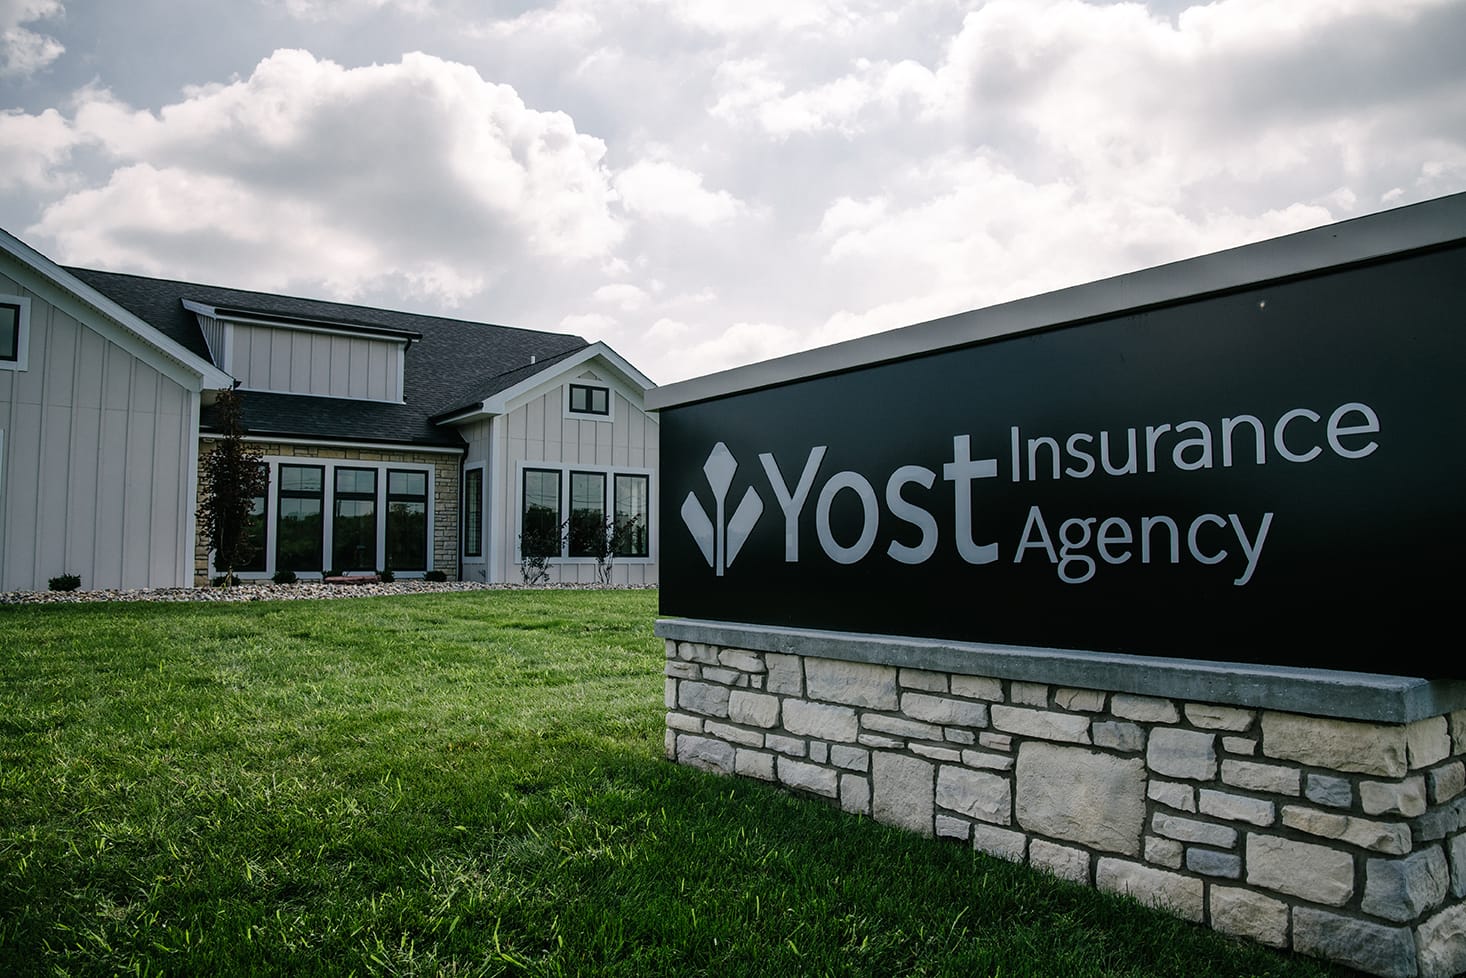 Yost-Insurance-Agency-front